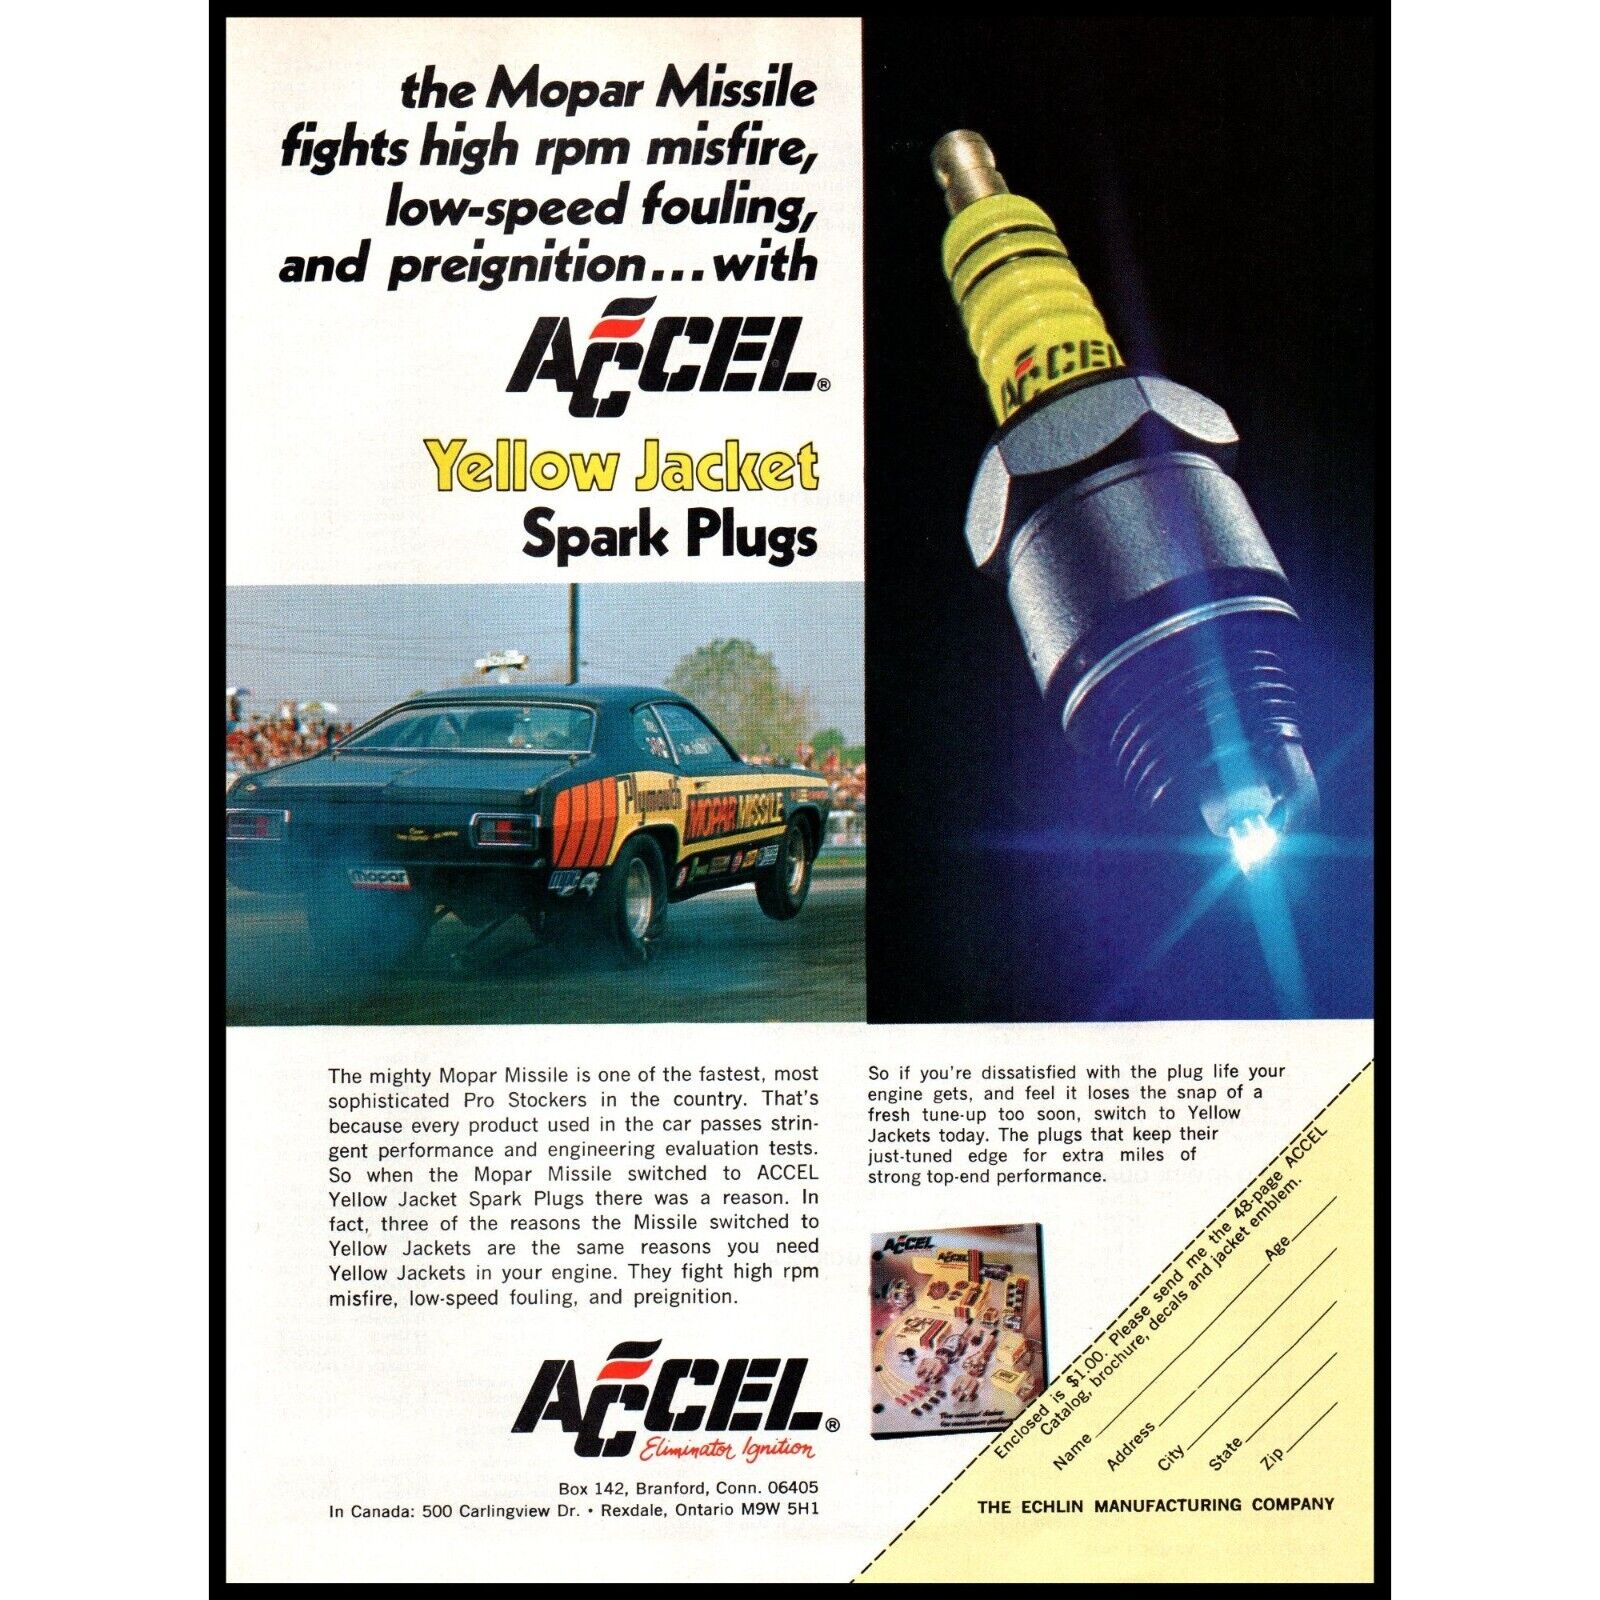 1973 Accel Yellow Jacket Spark Plugs Vintage Print Ad Mopar Missile Wall Art